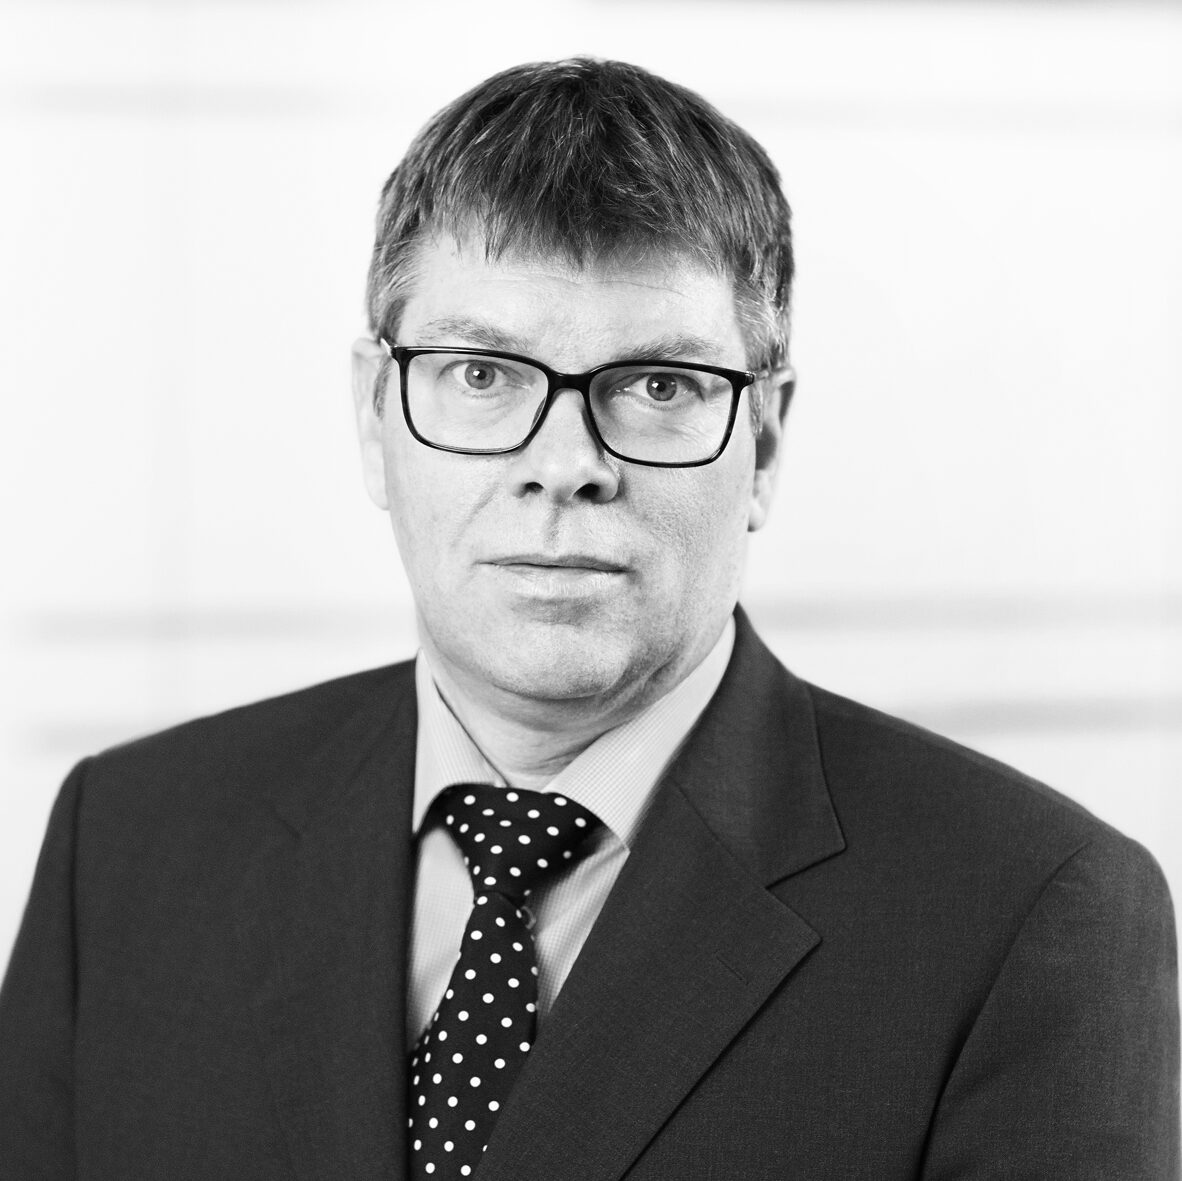 Henrik J. Thomsen